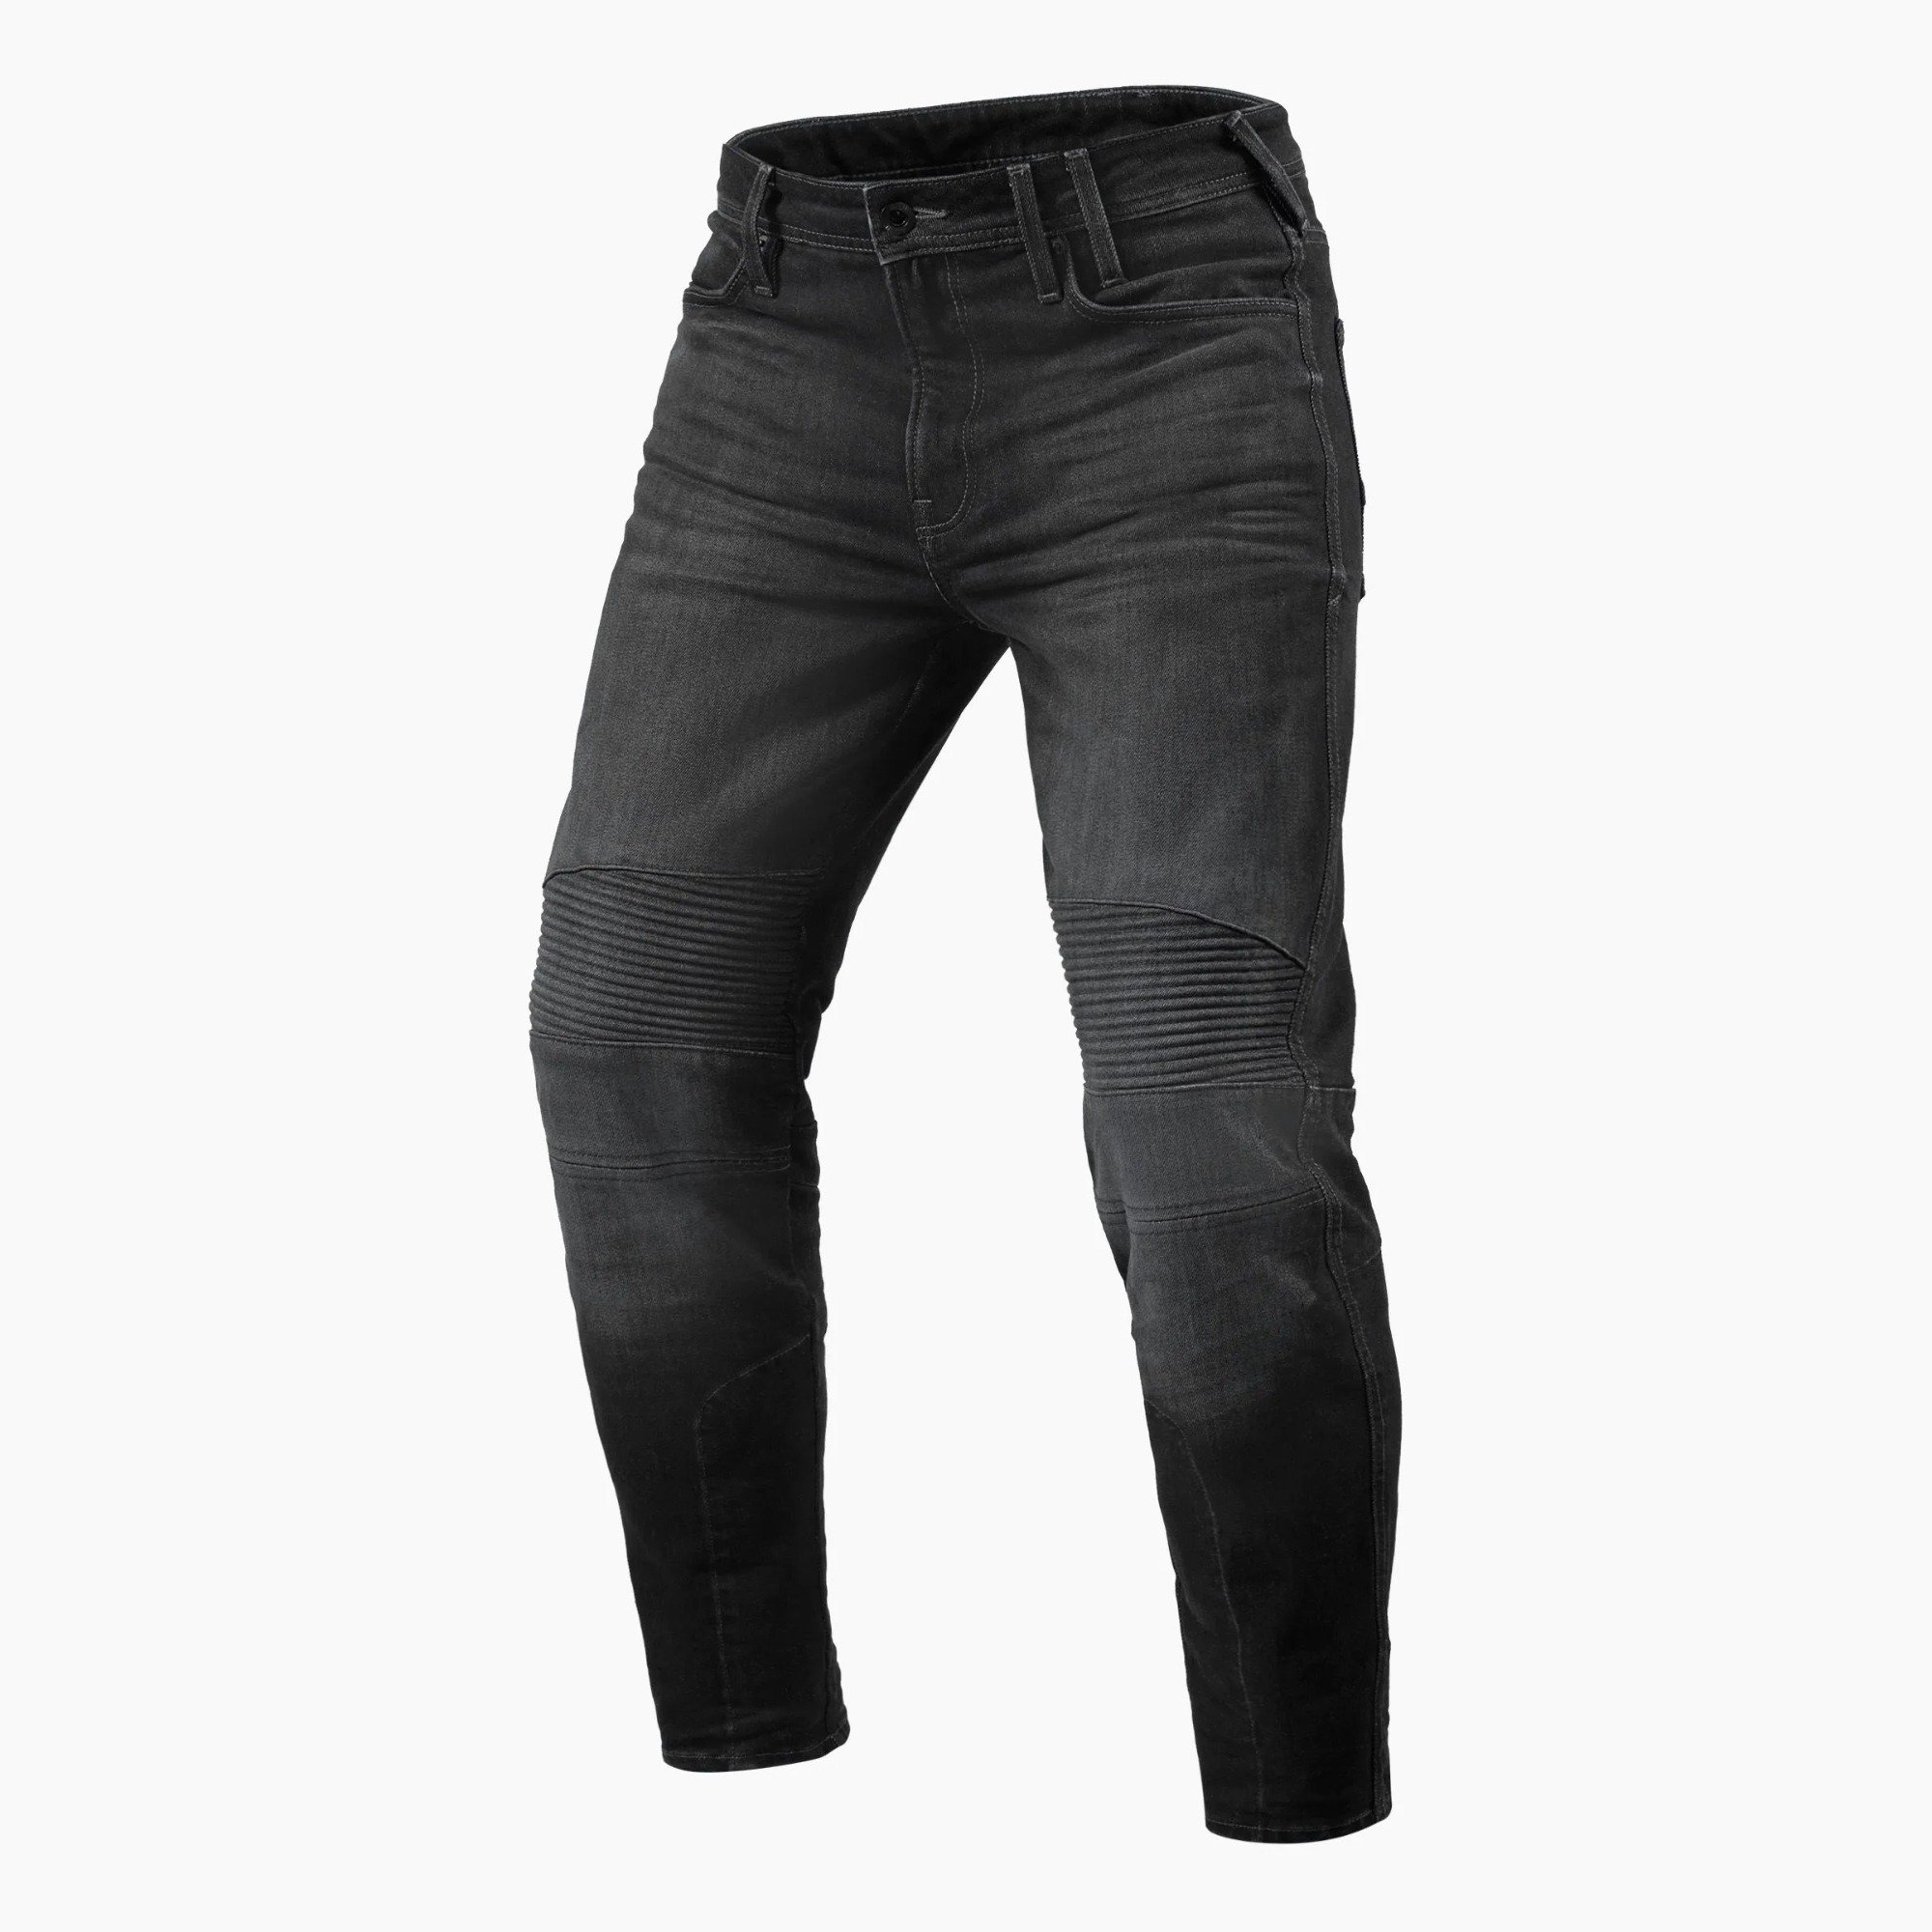 Image of REV'IT! Jeans Moto 2 TF Dark Grey Used Motorcycle Jeans Talla L36/W30